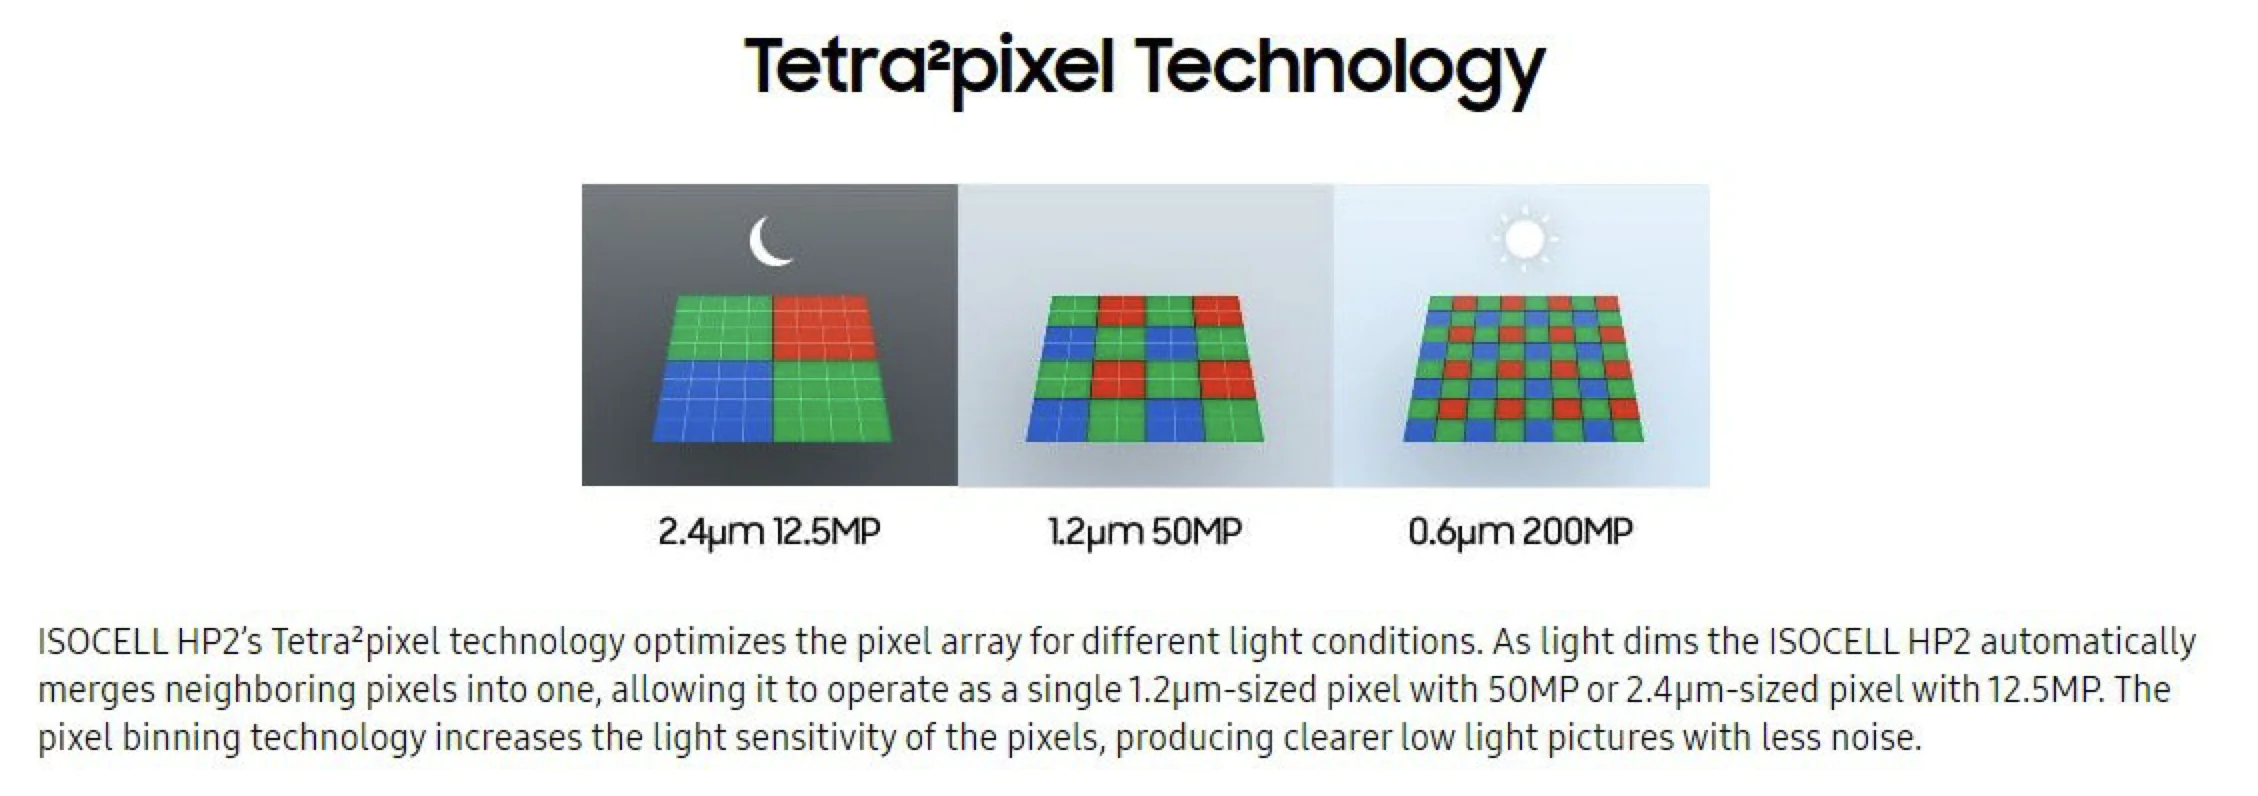 Samsung Tetra-pixel